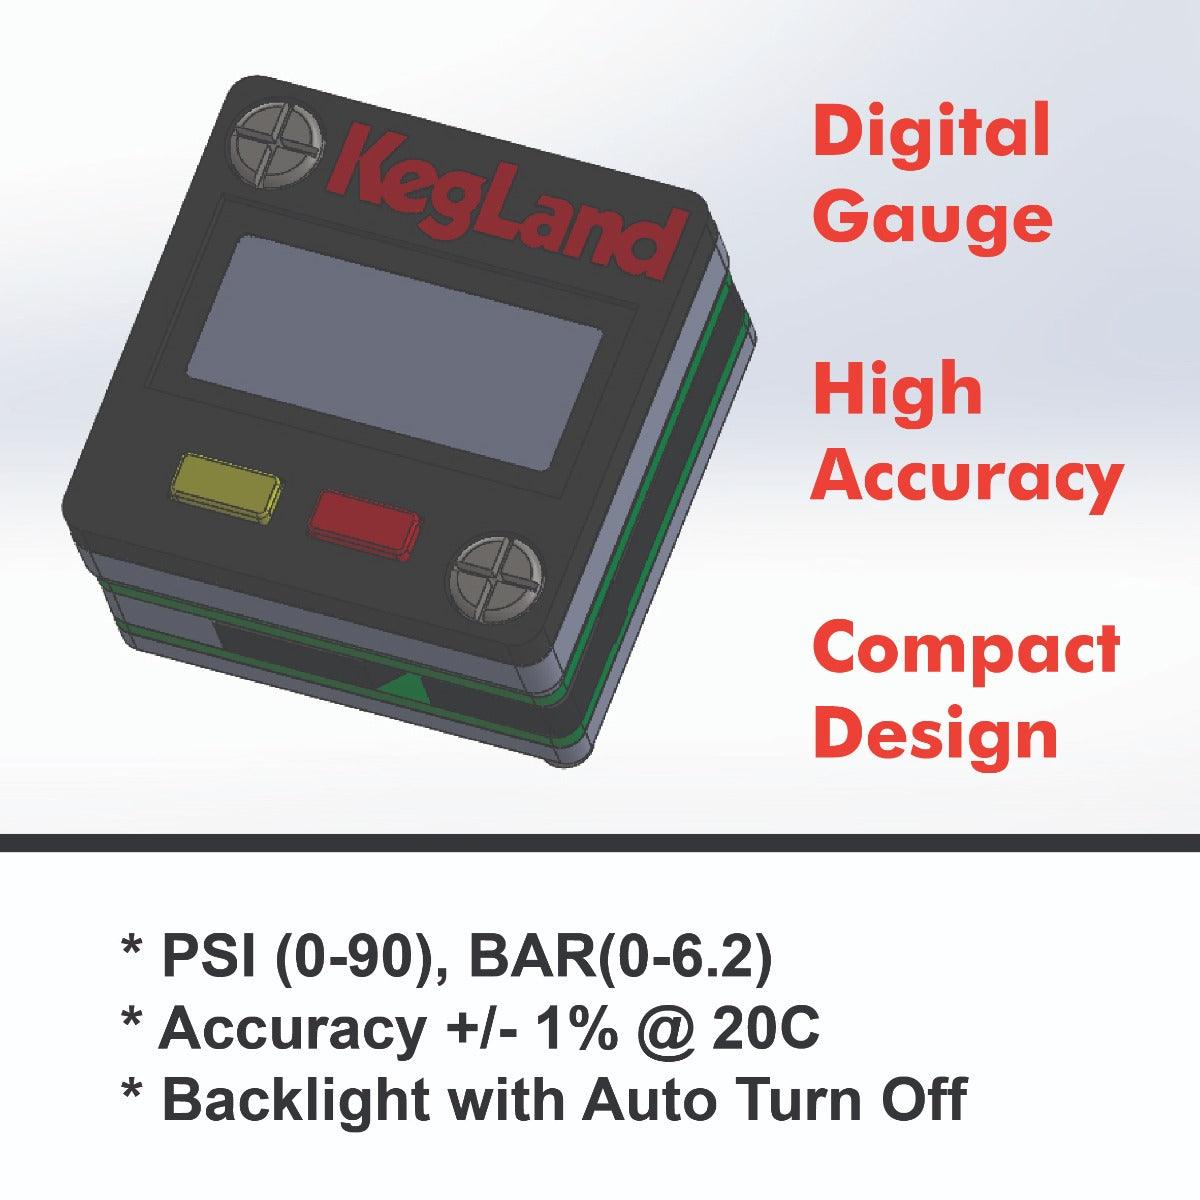 Mini Digital Illuminated Gauge 27mm x 27mm x 8mm 0-100psi High Accuracy - KegLand